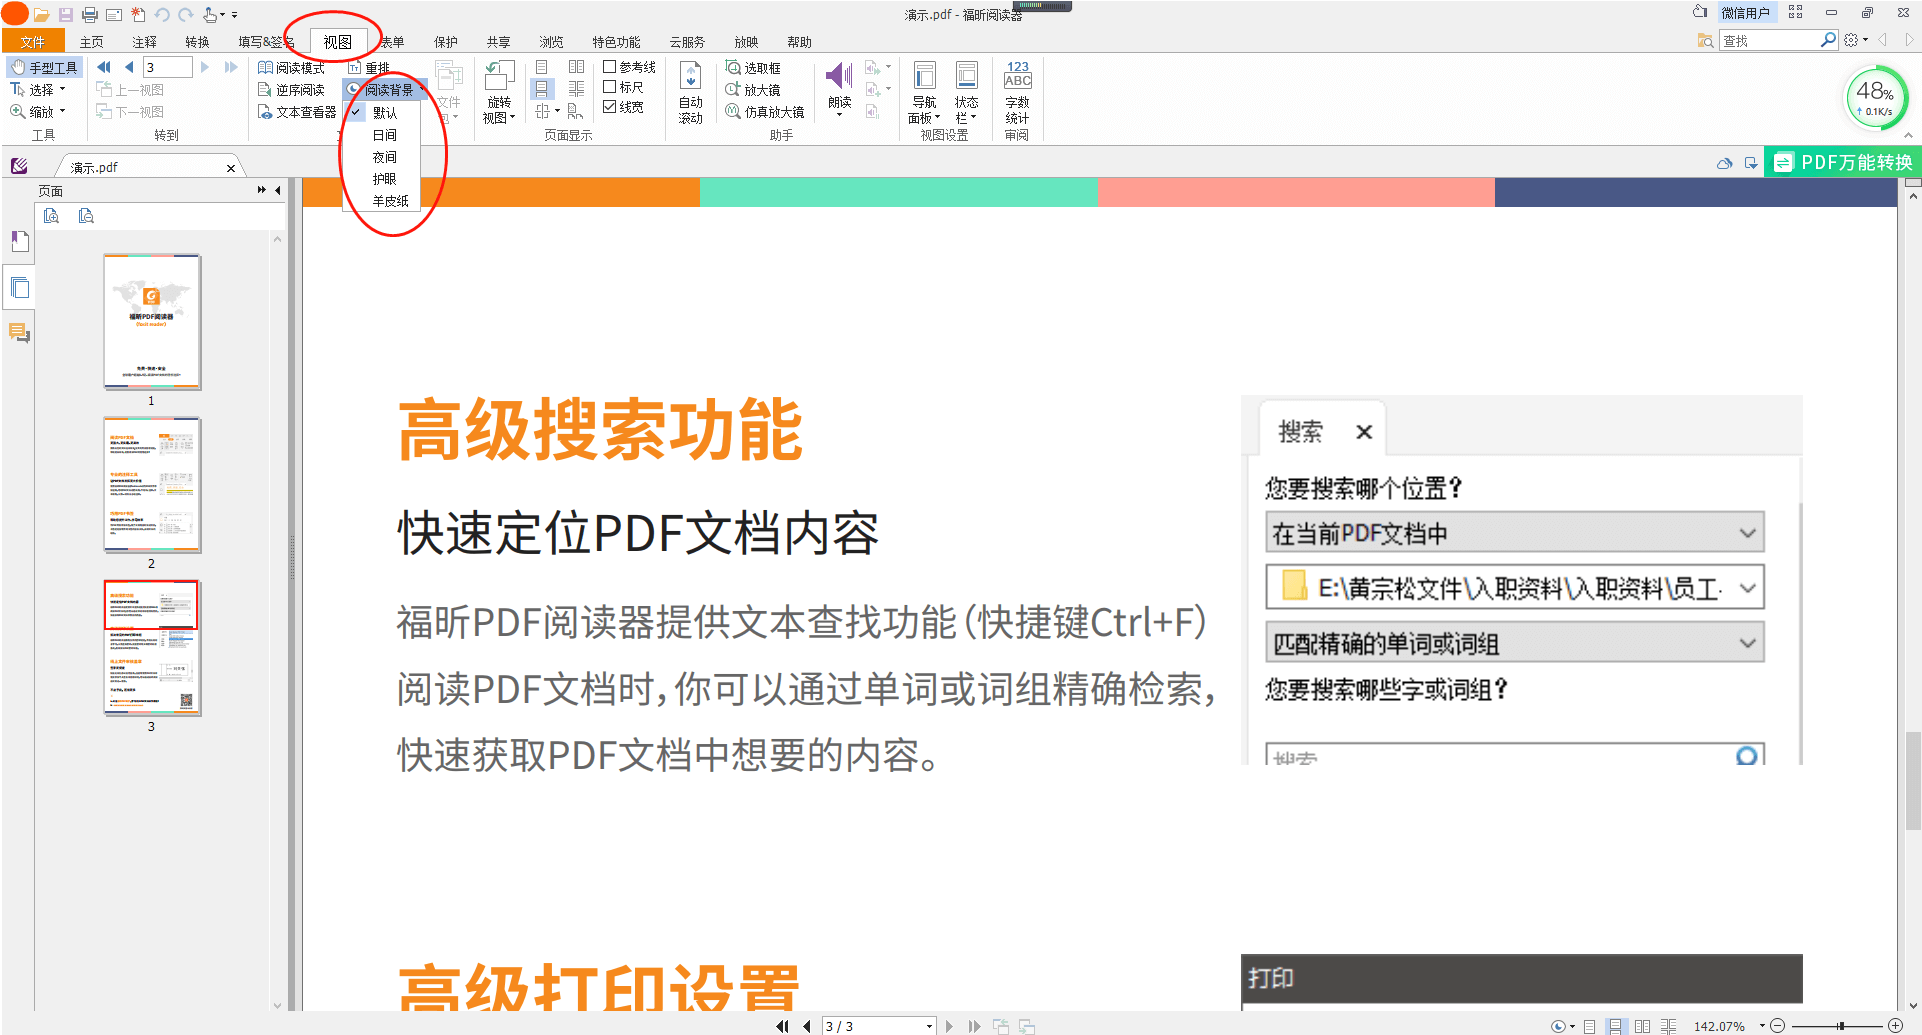 PPT转换为PDF